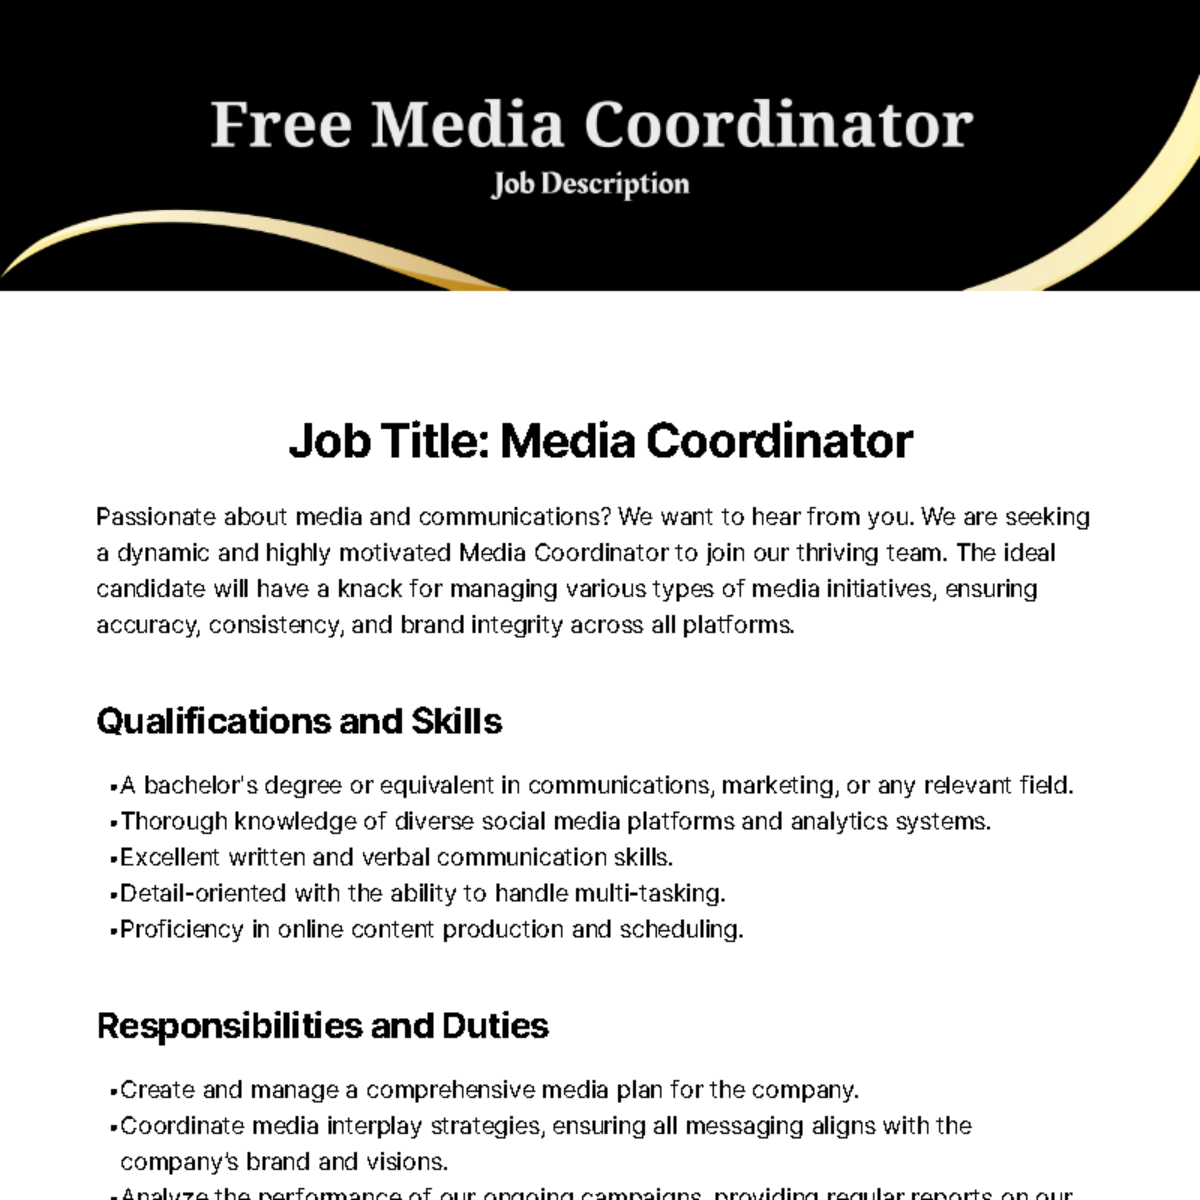 Free Media Coordinator Job Description Template